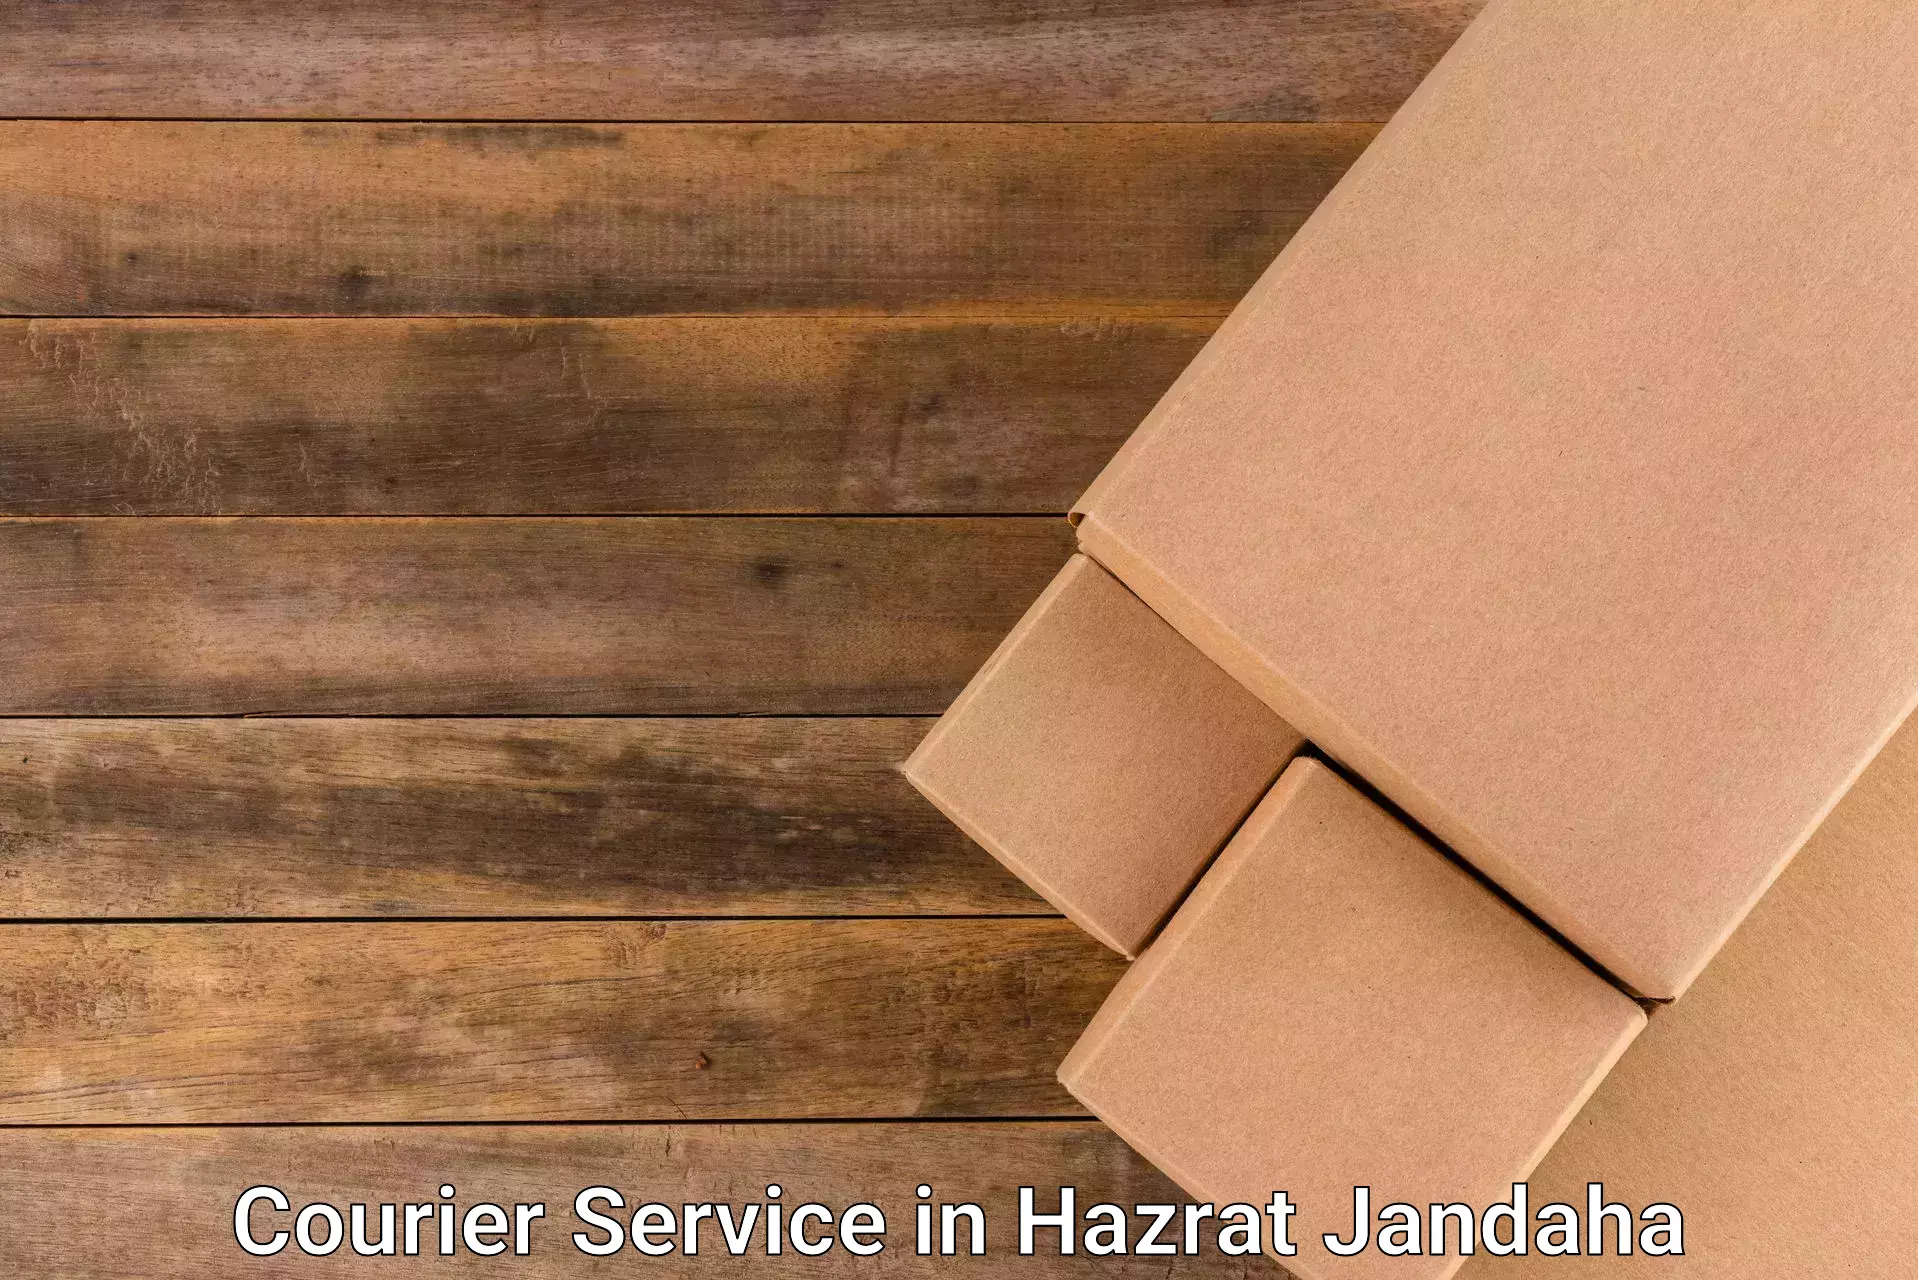 Efficient logistics management in Hazrat Jandaha